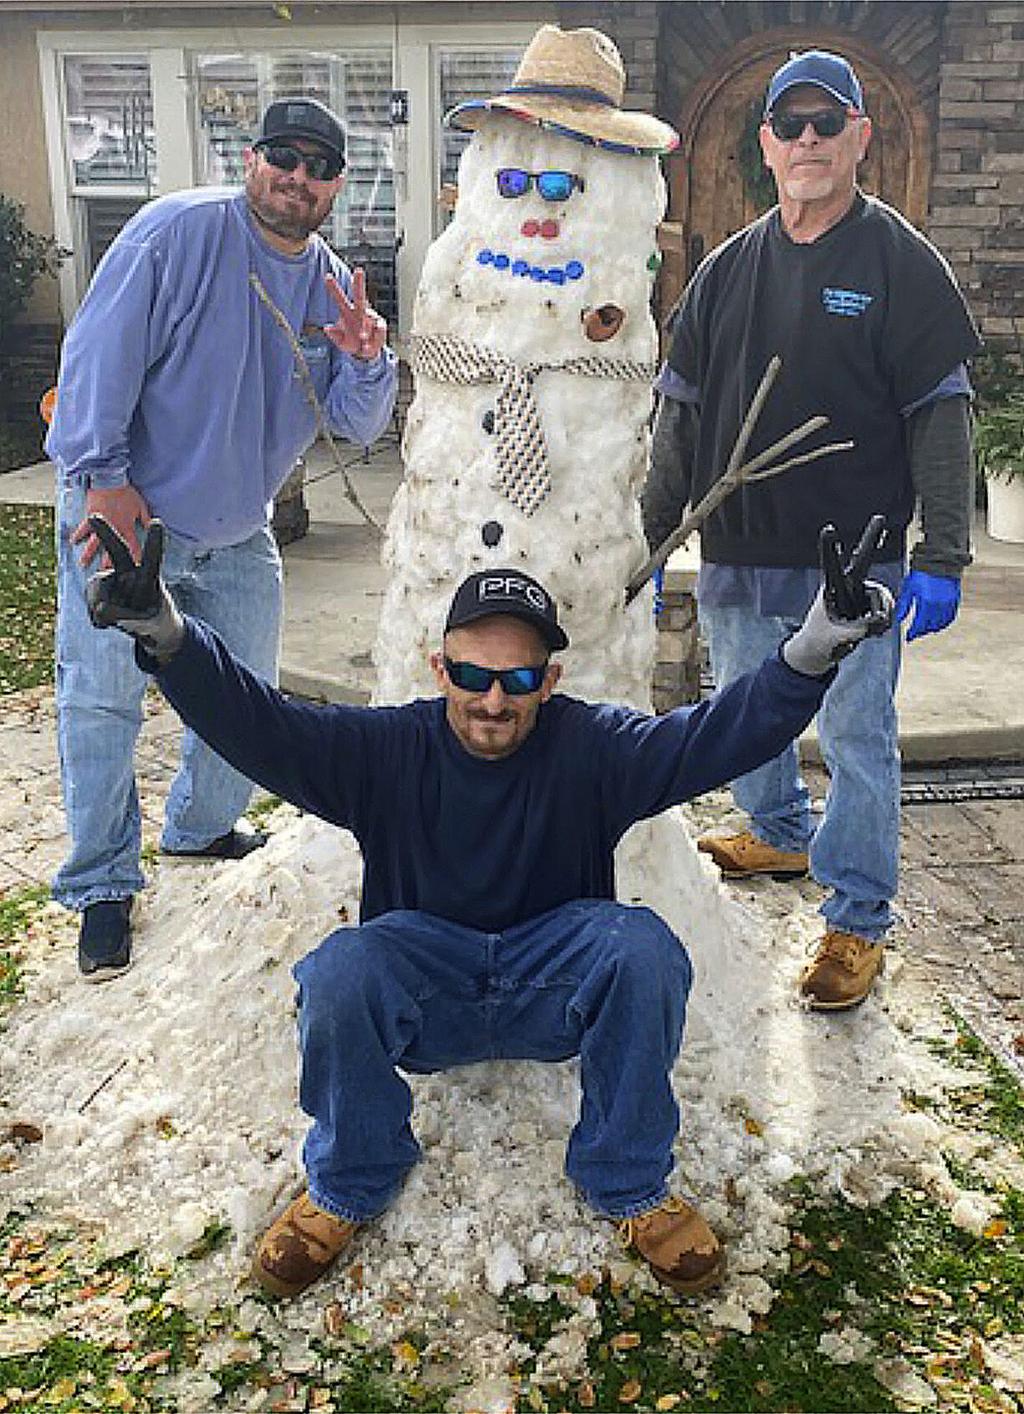 STEVE FLORES: Do you want to build a snowman?